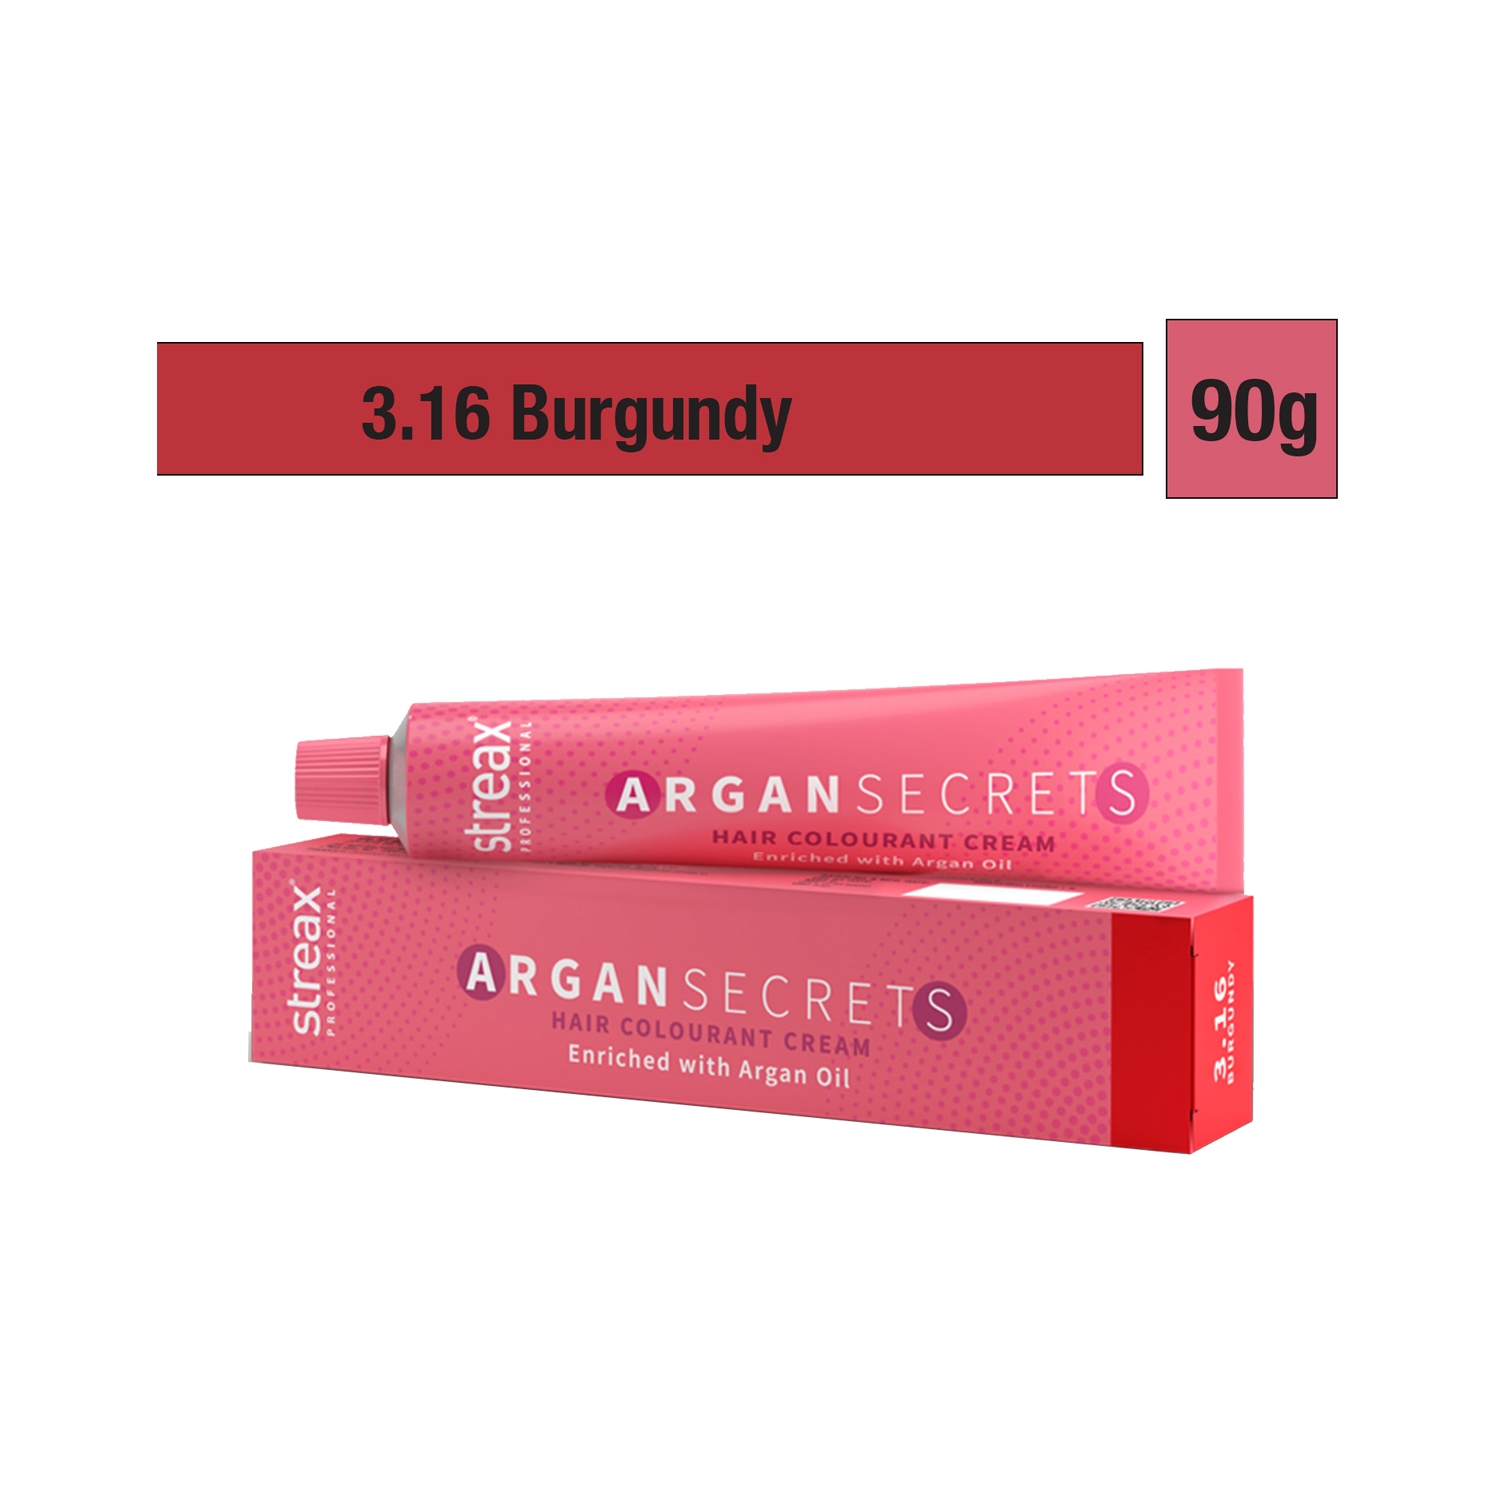 Streax Professional Argan Secrets Hair Colorant Cream - 3.16 Burgundy (90g)